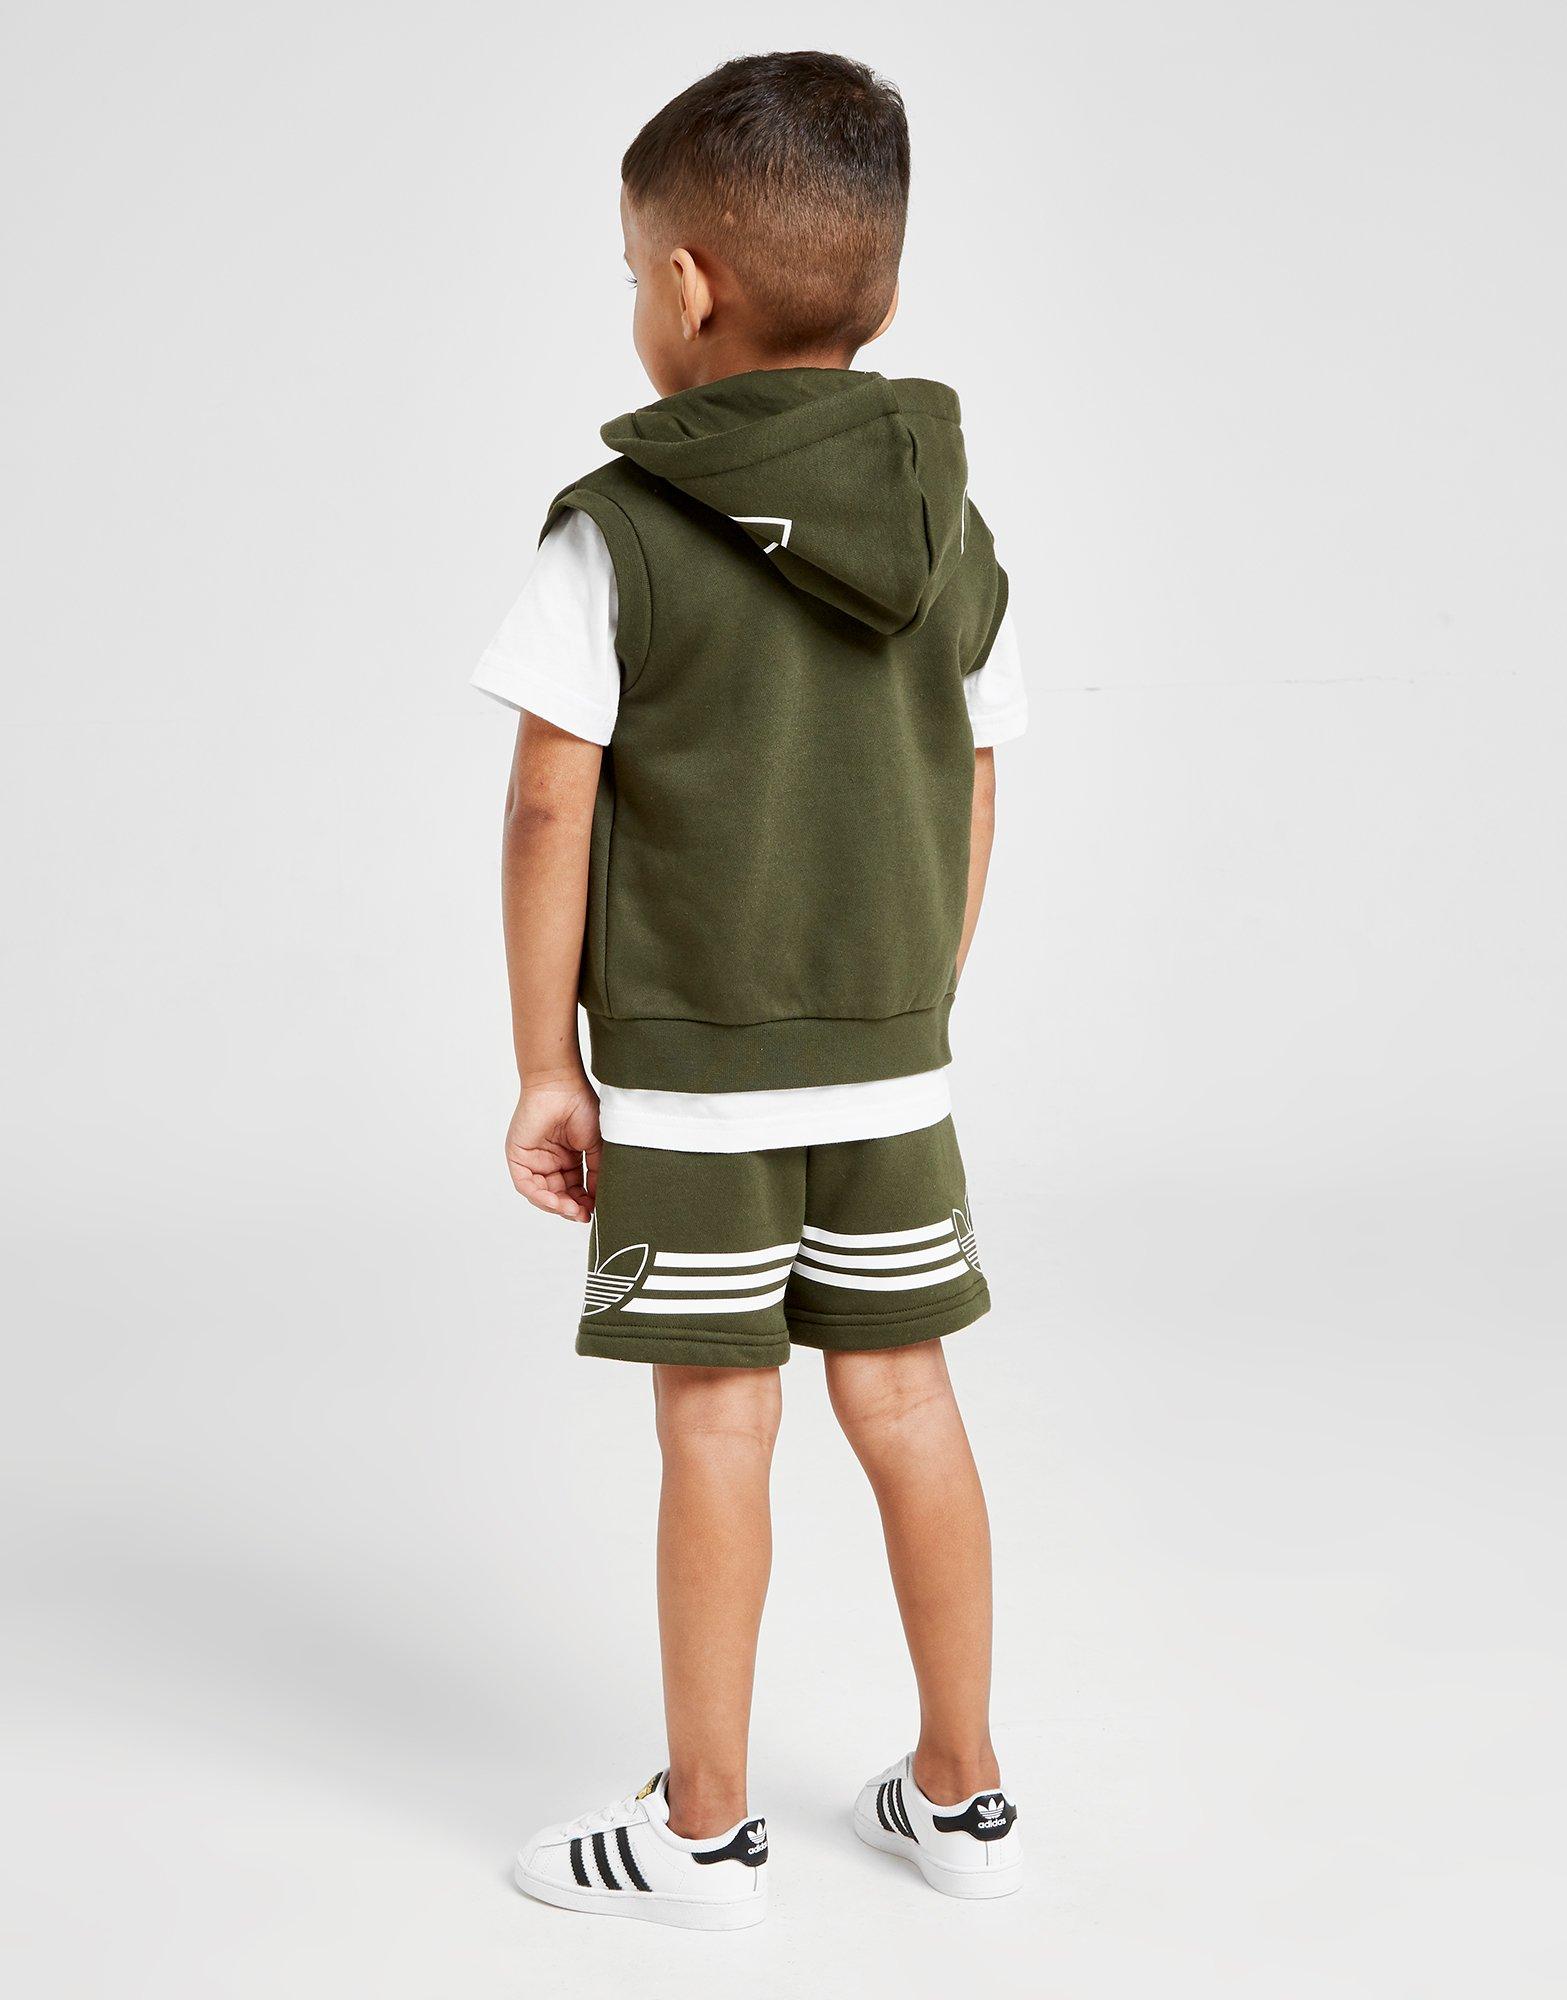 adidas originals 3 piece sleeveless suit infant